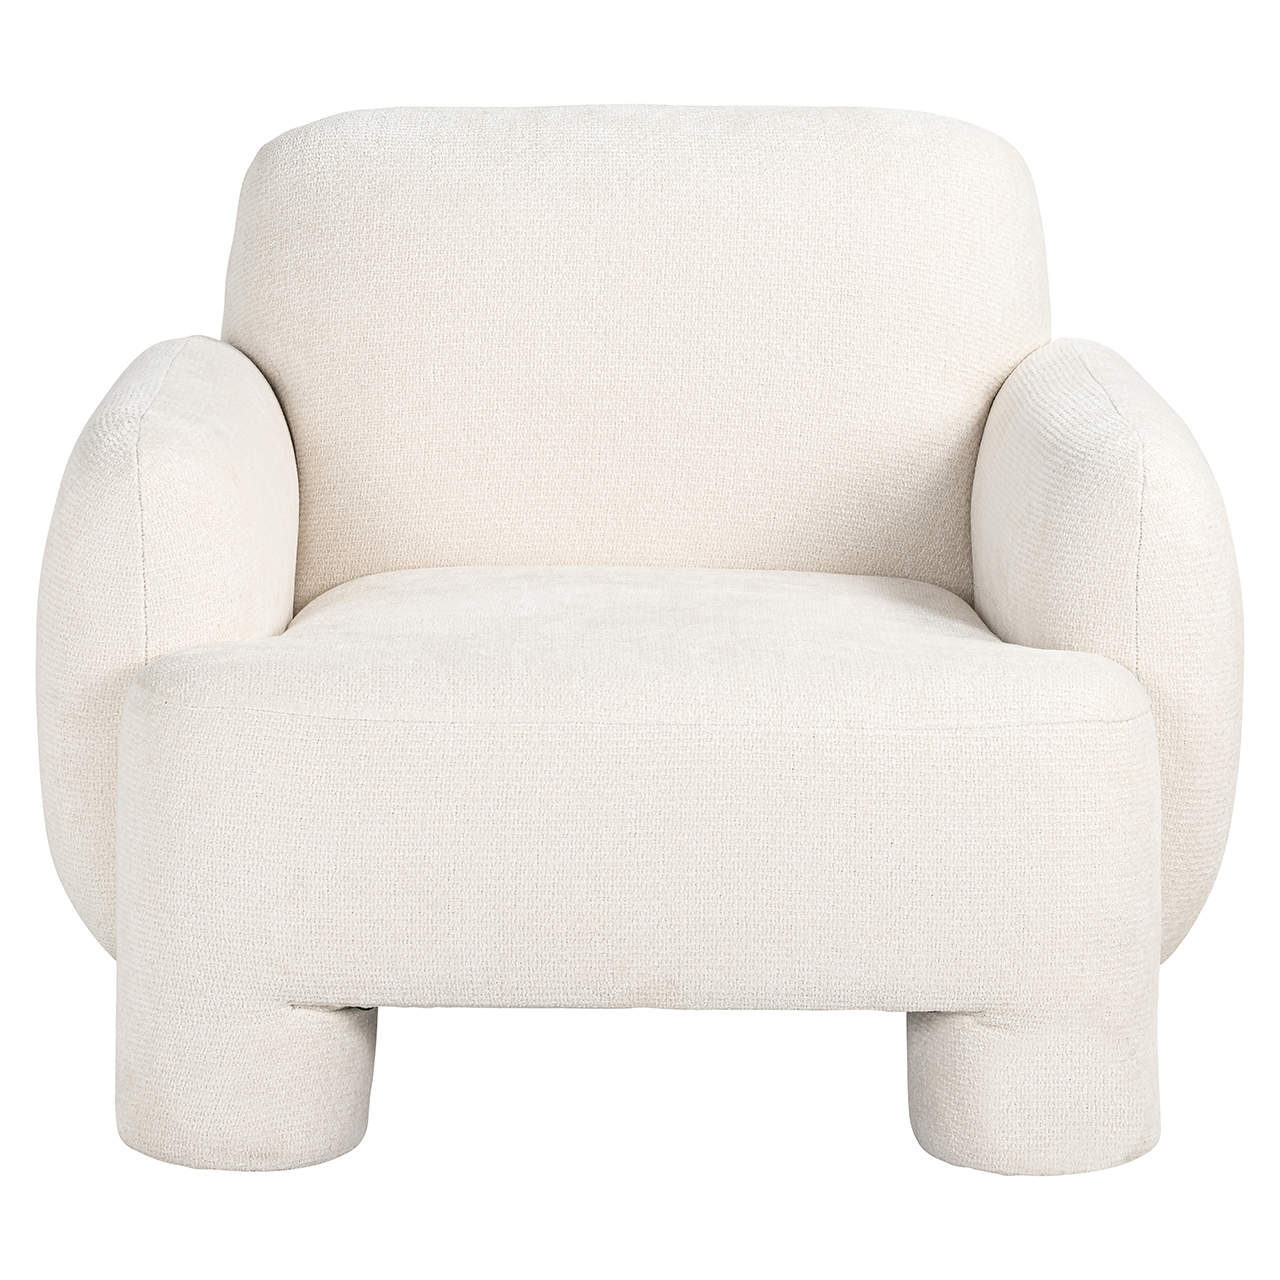 Easy Chair Boli unicorn white (Unicorn 02 white)